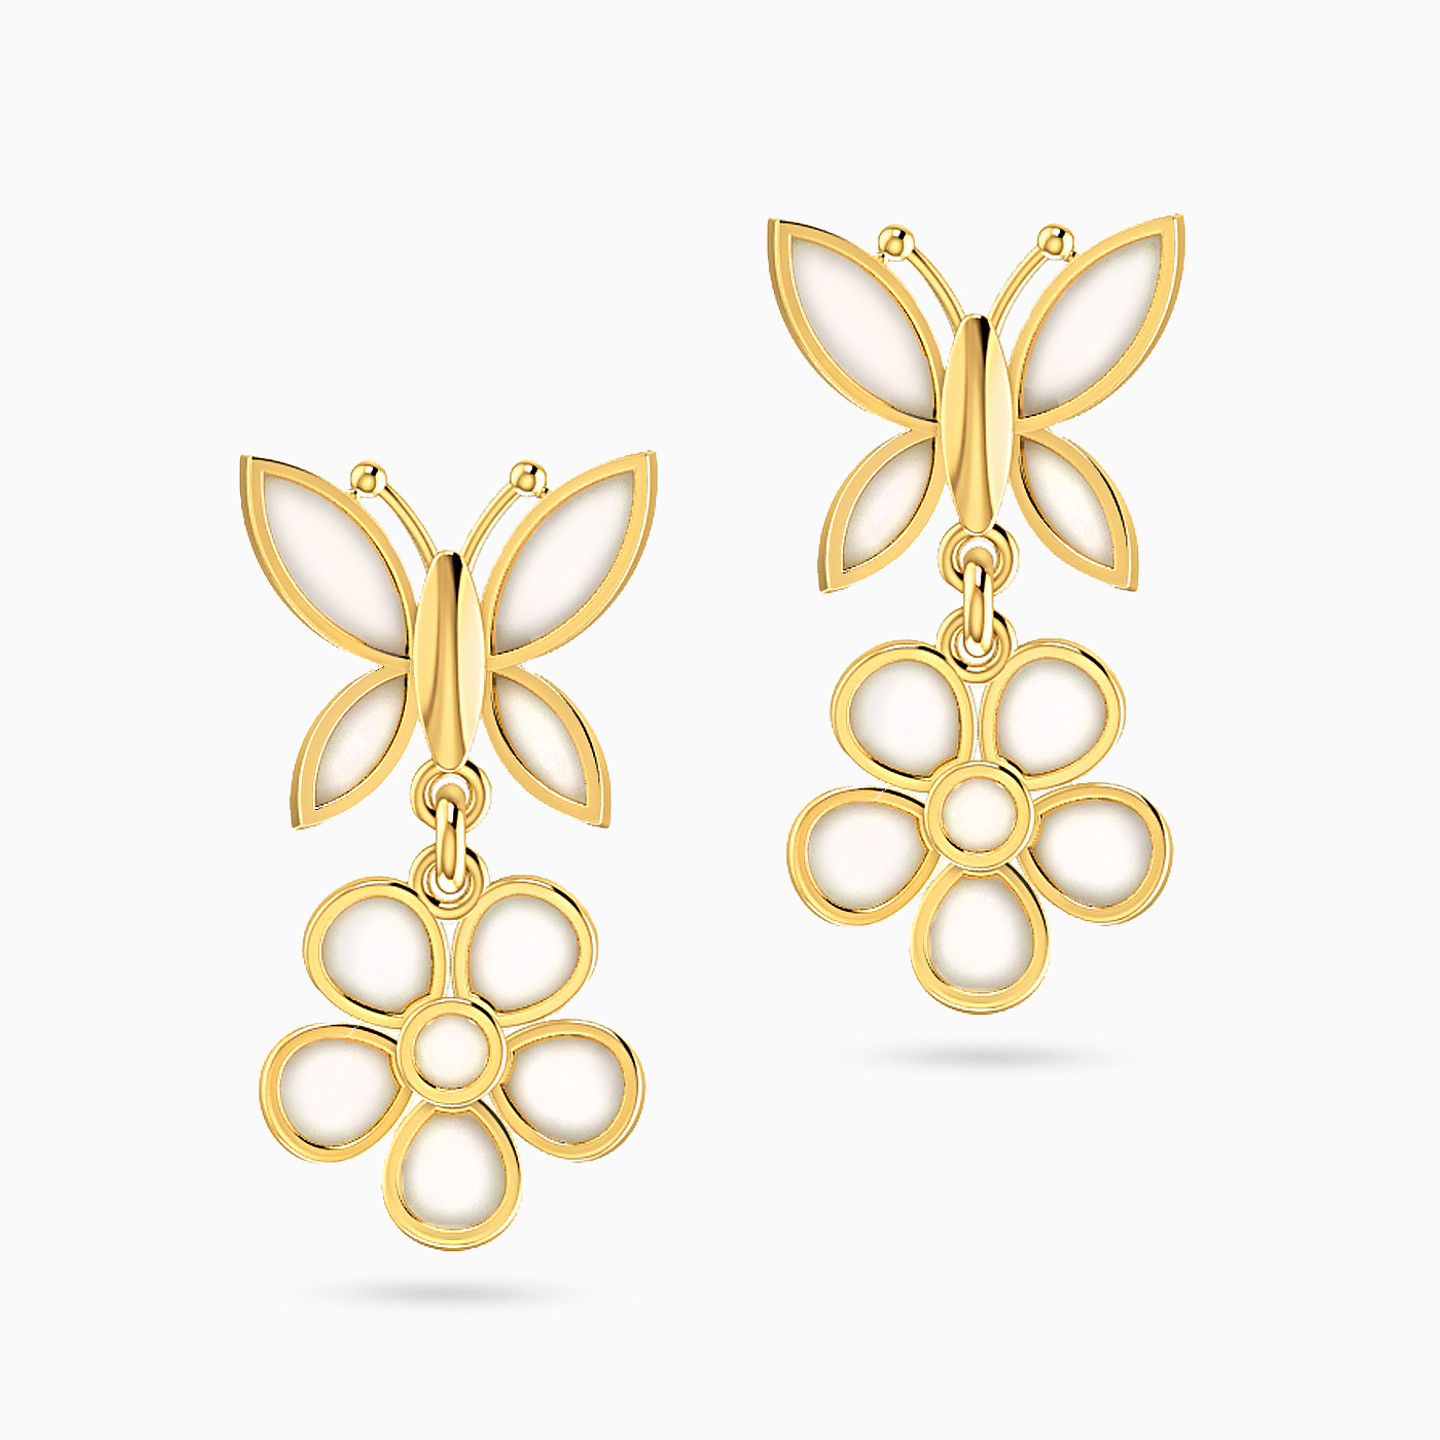 18K Gold Colored Stones Stud Earrings